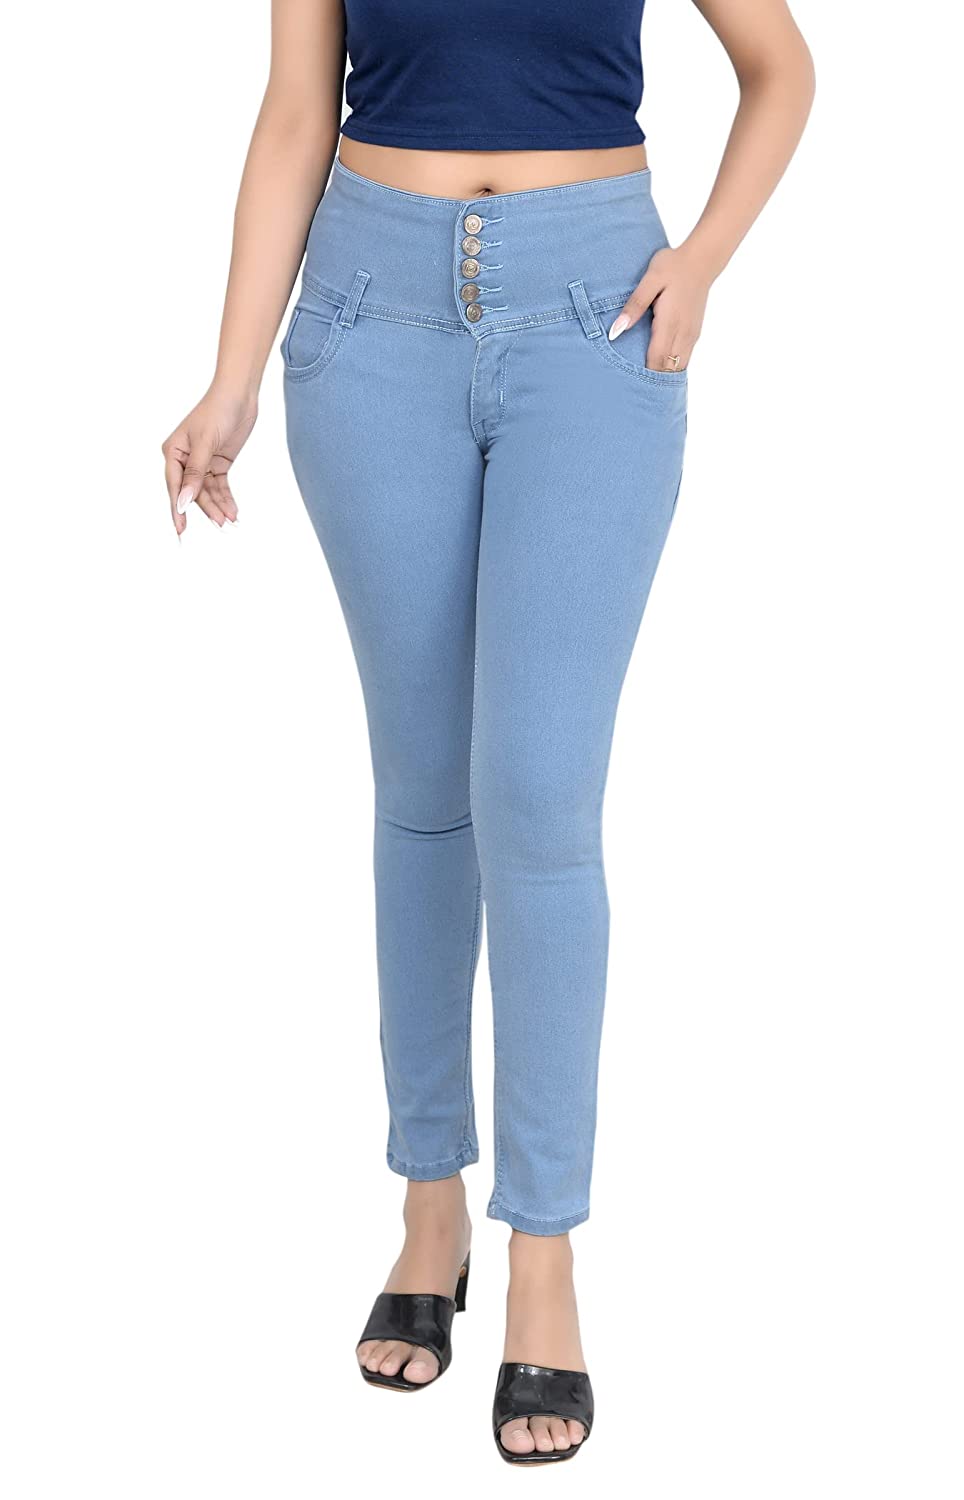 https://kreativewebtech.com/Projects/DFashionkart/wp-content/uploads/2022/10/Trendy-Stylish-New-Look-5-Button-Jeans-For-Women-DFASHIONKART.jpg